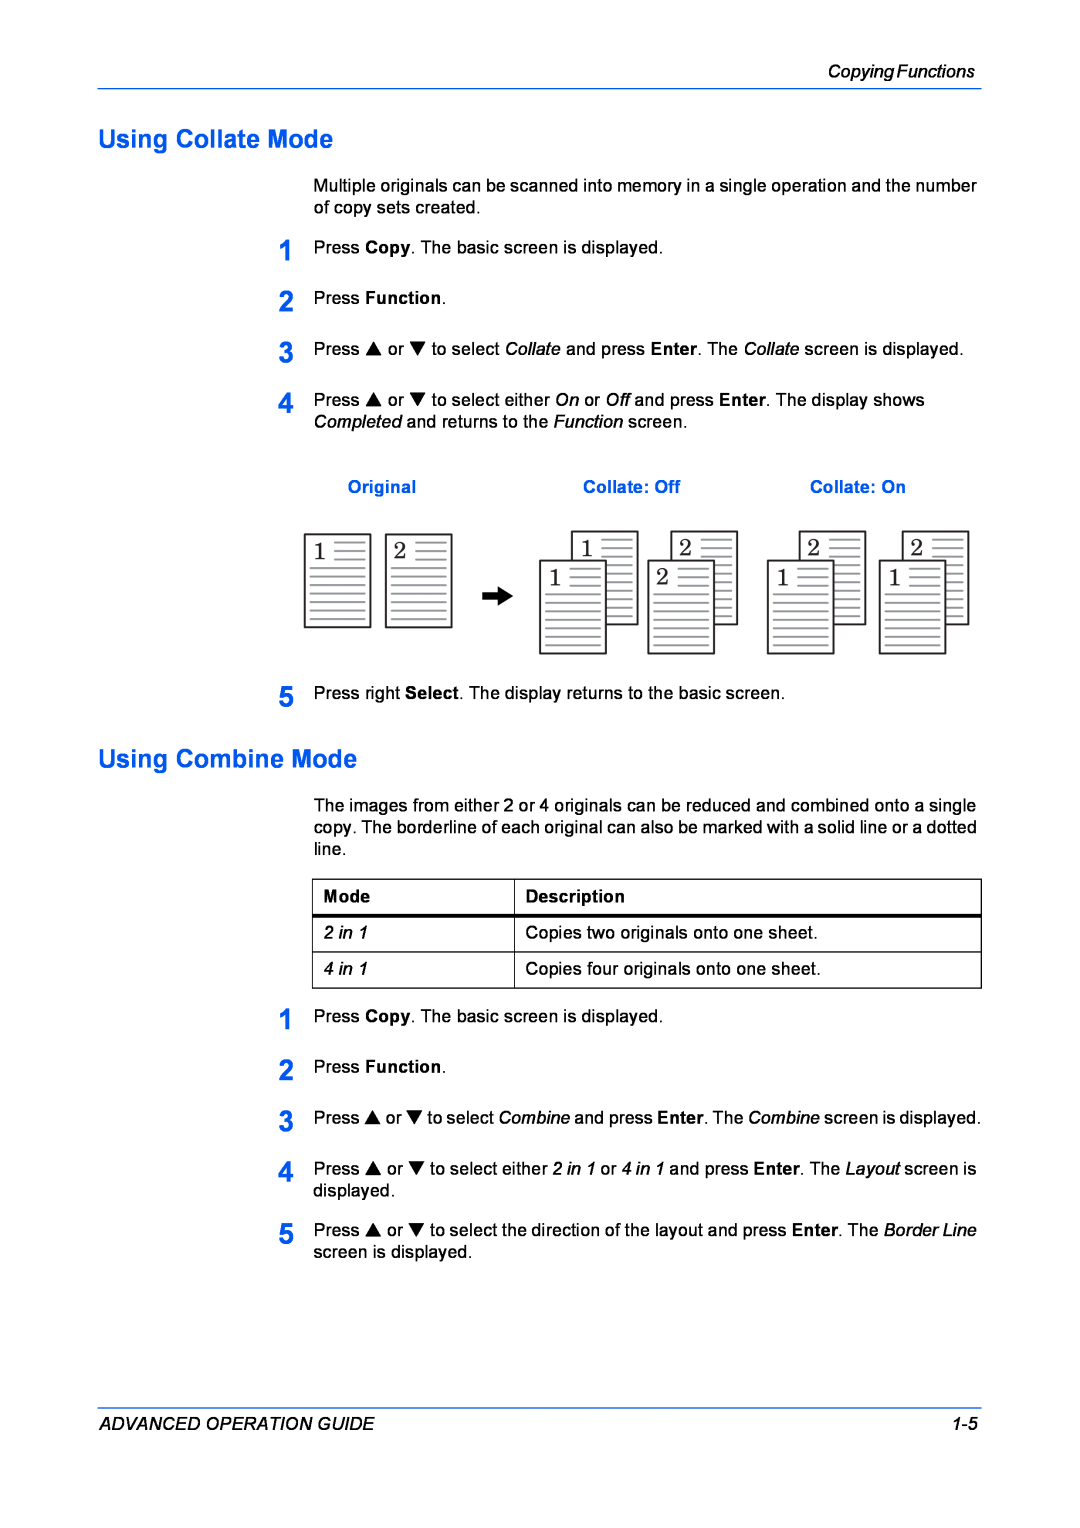 Kyocera KM-1820 manual Using Collate Mode, Using Combine Mode, Original, Collate Off, Collate On, Description 